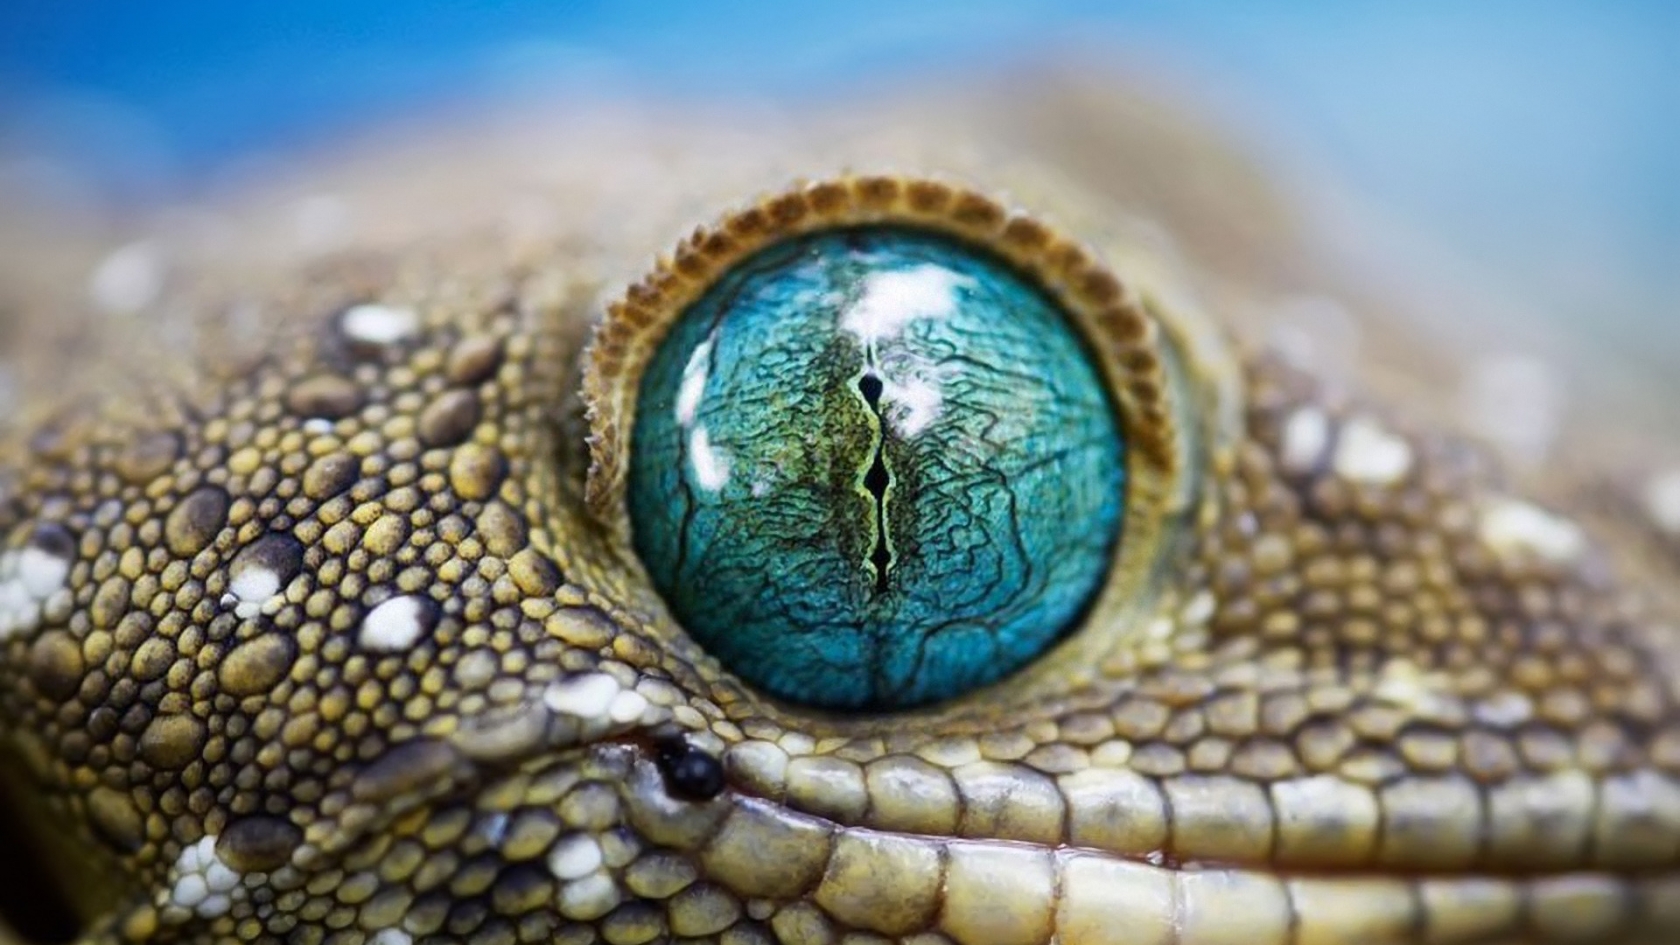 Blue Reptile Eye for 1680 x 945 HDTV resolution